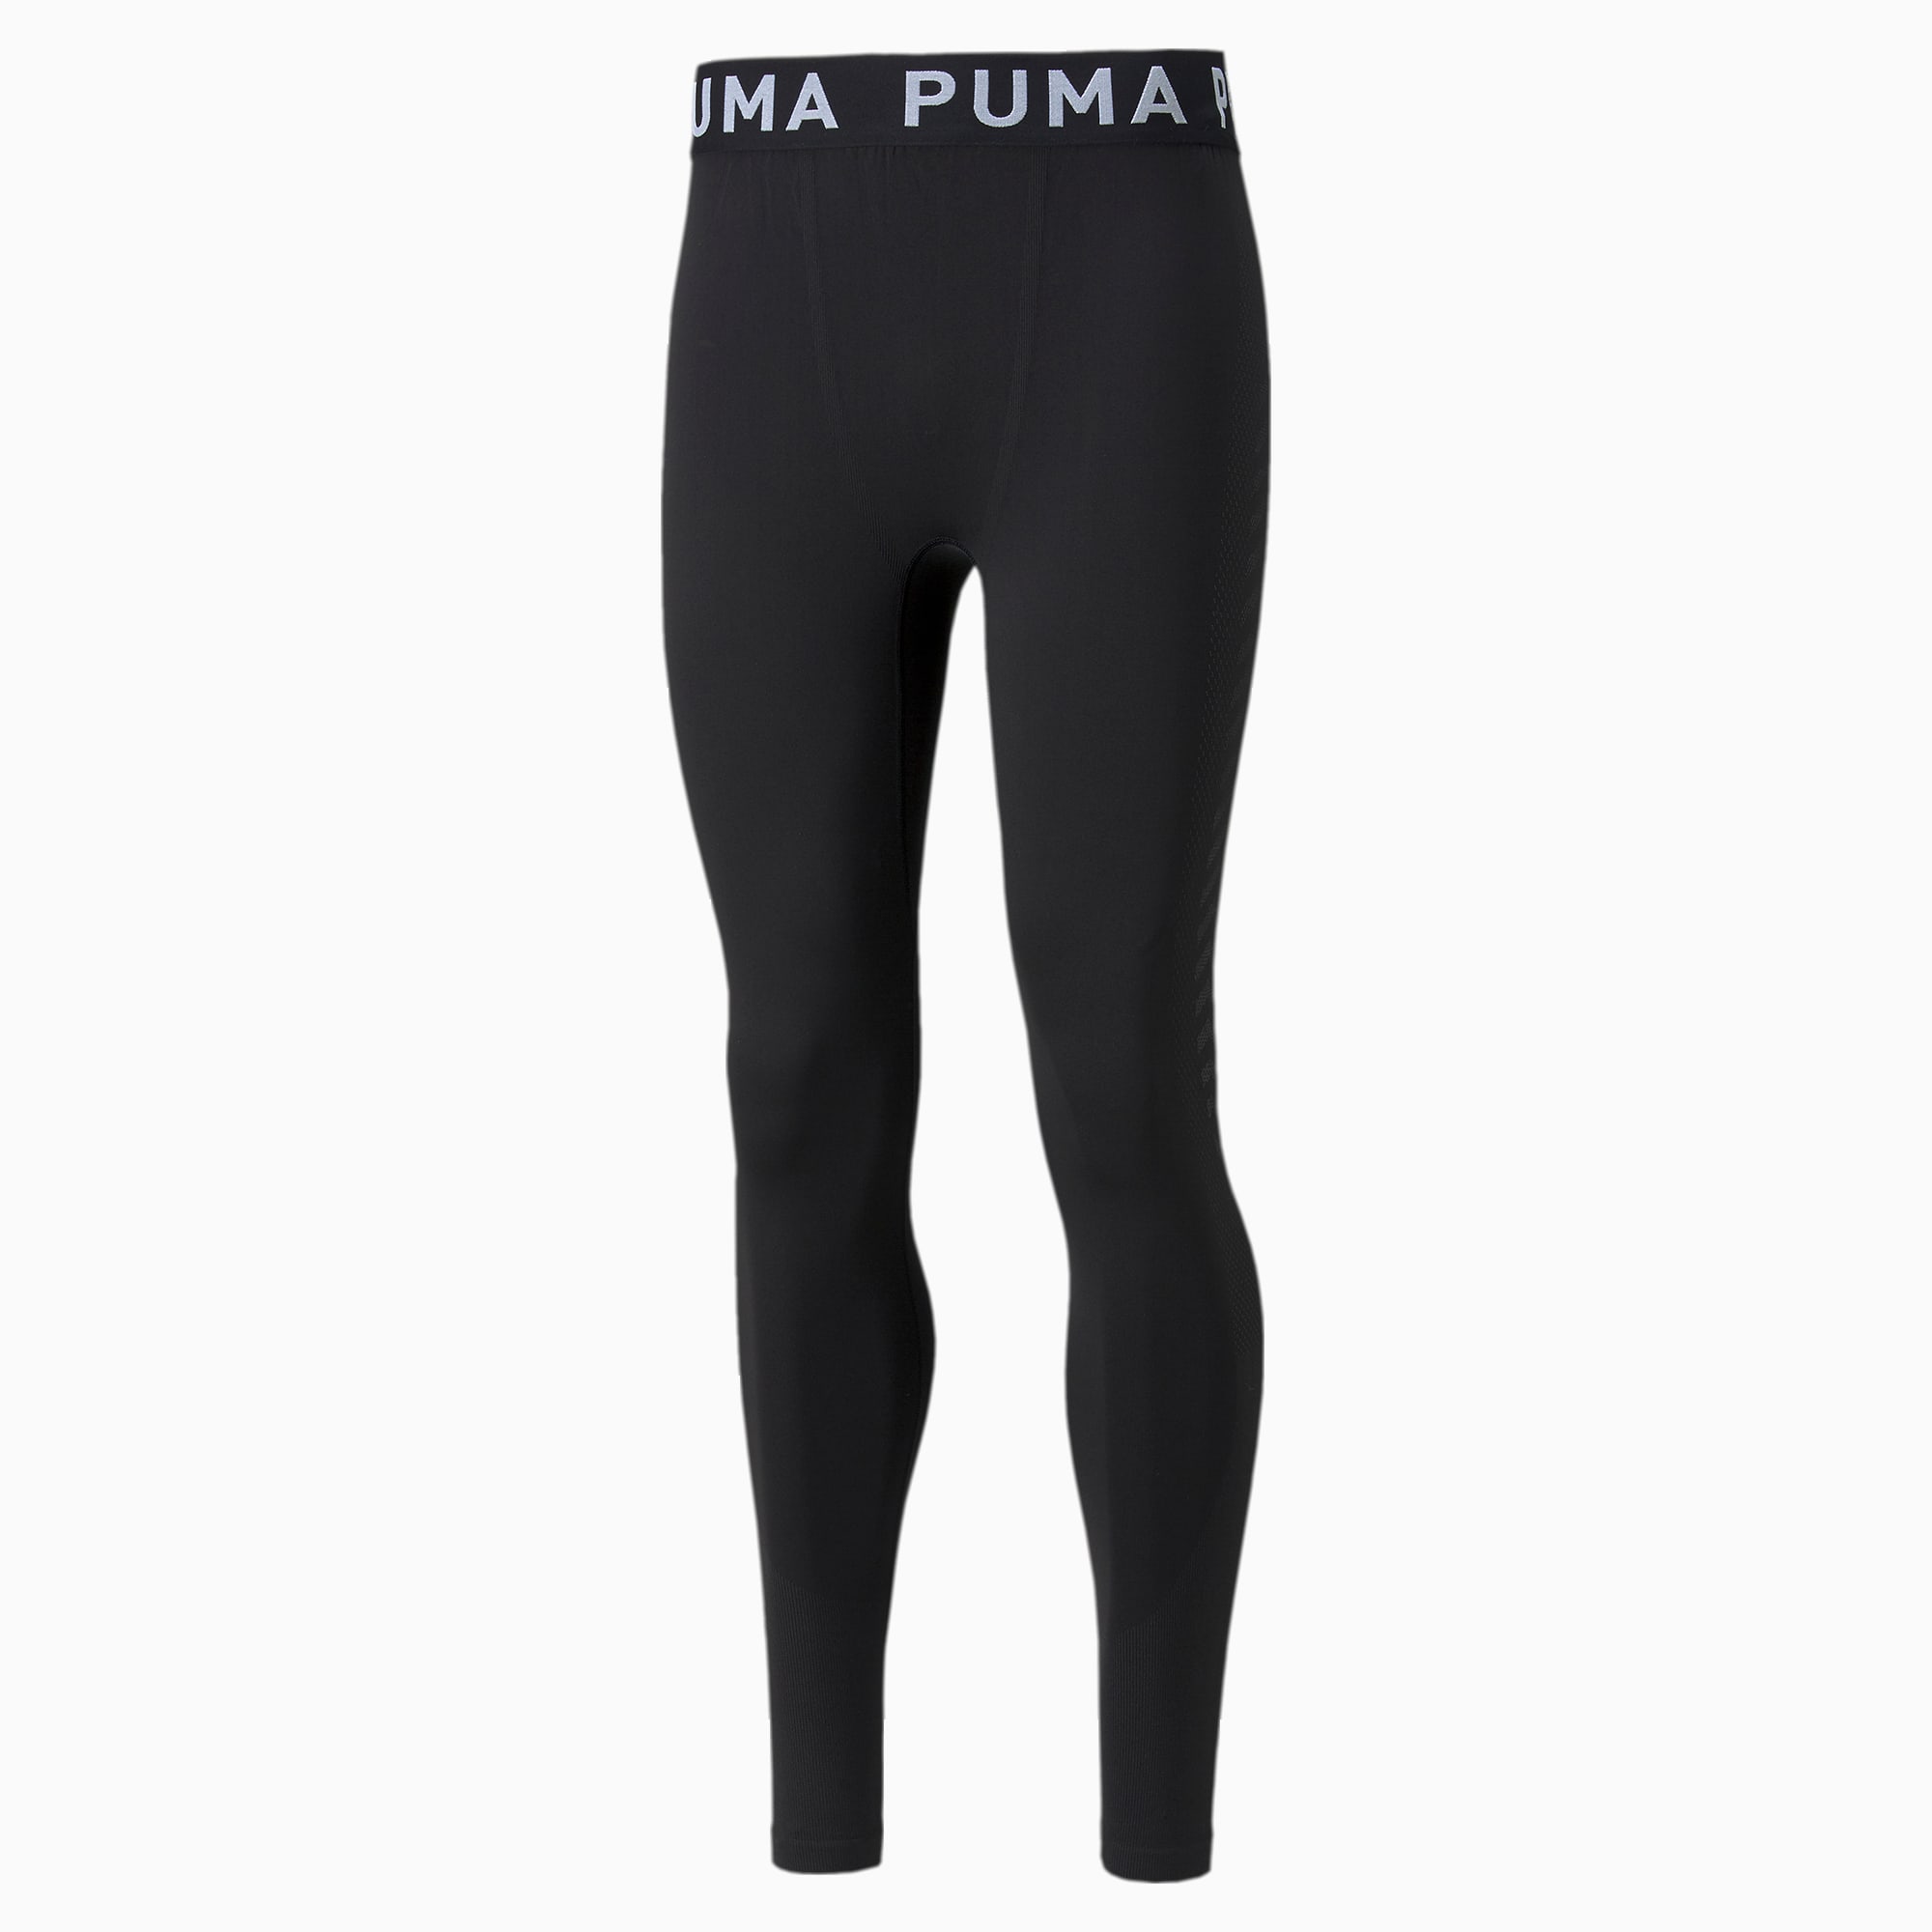 PUMA Formknit Seamless Long Men's Training Tights, Black, Size L, Clothing